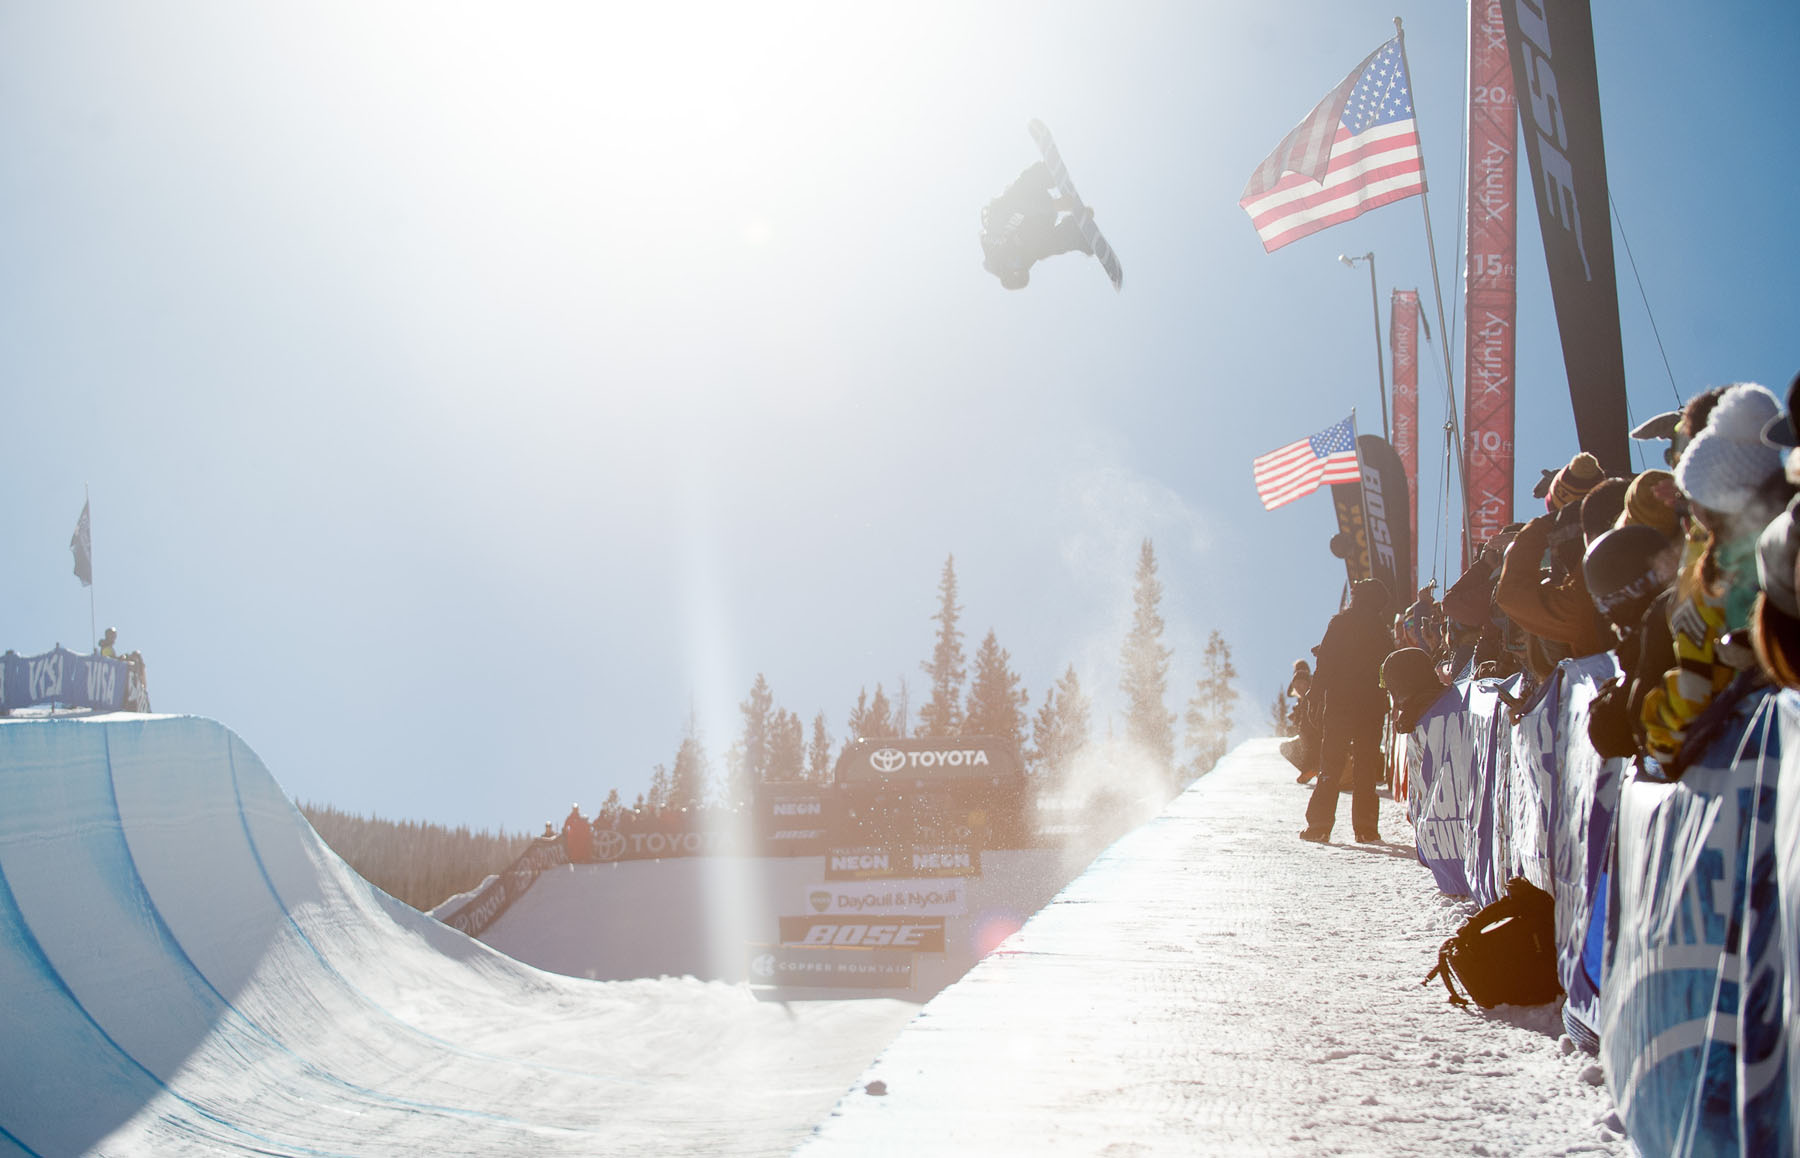 Monster Energy's Ayumu Hirano Wins Toyota U.S. Grand Prix Halfpipe of Snowboarding at Copper Mountain